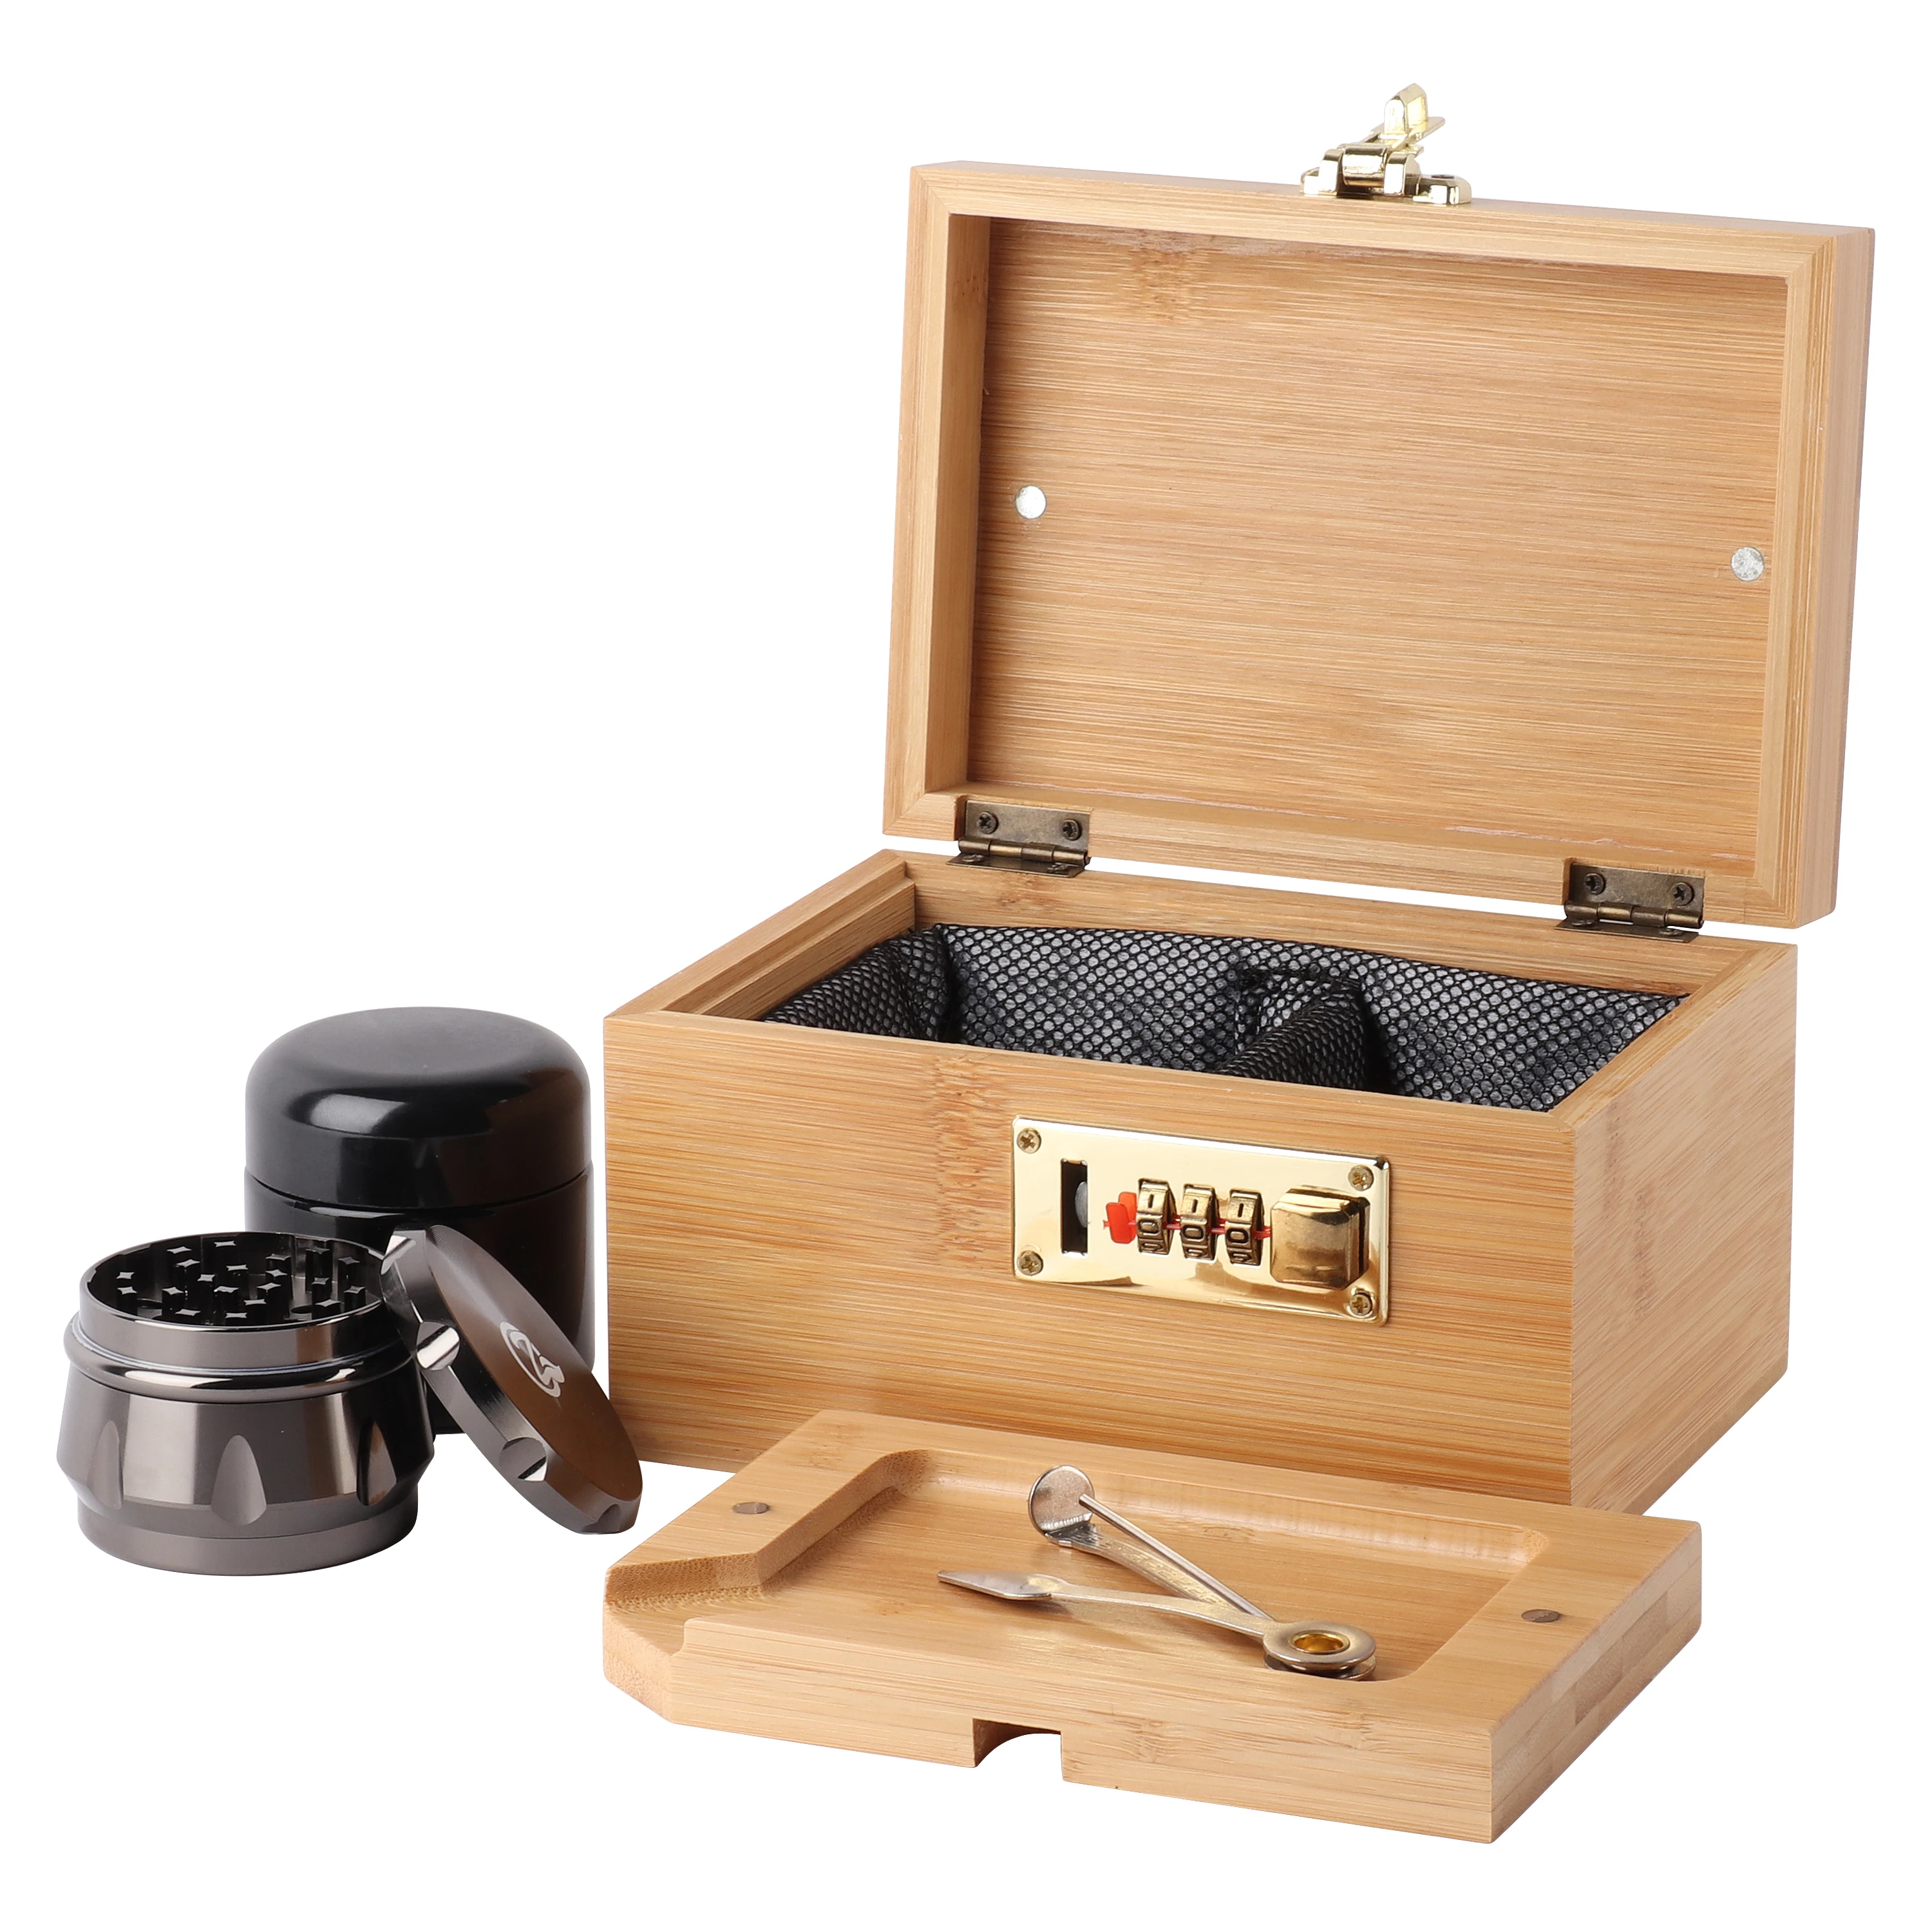 

Stash Box Combo - Accessories Kit, Locking Wooden Box with Grinder, UV Glass Stash Jar, Bamboo Box with Lock